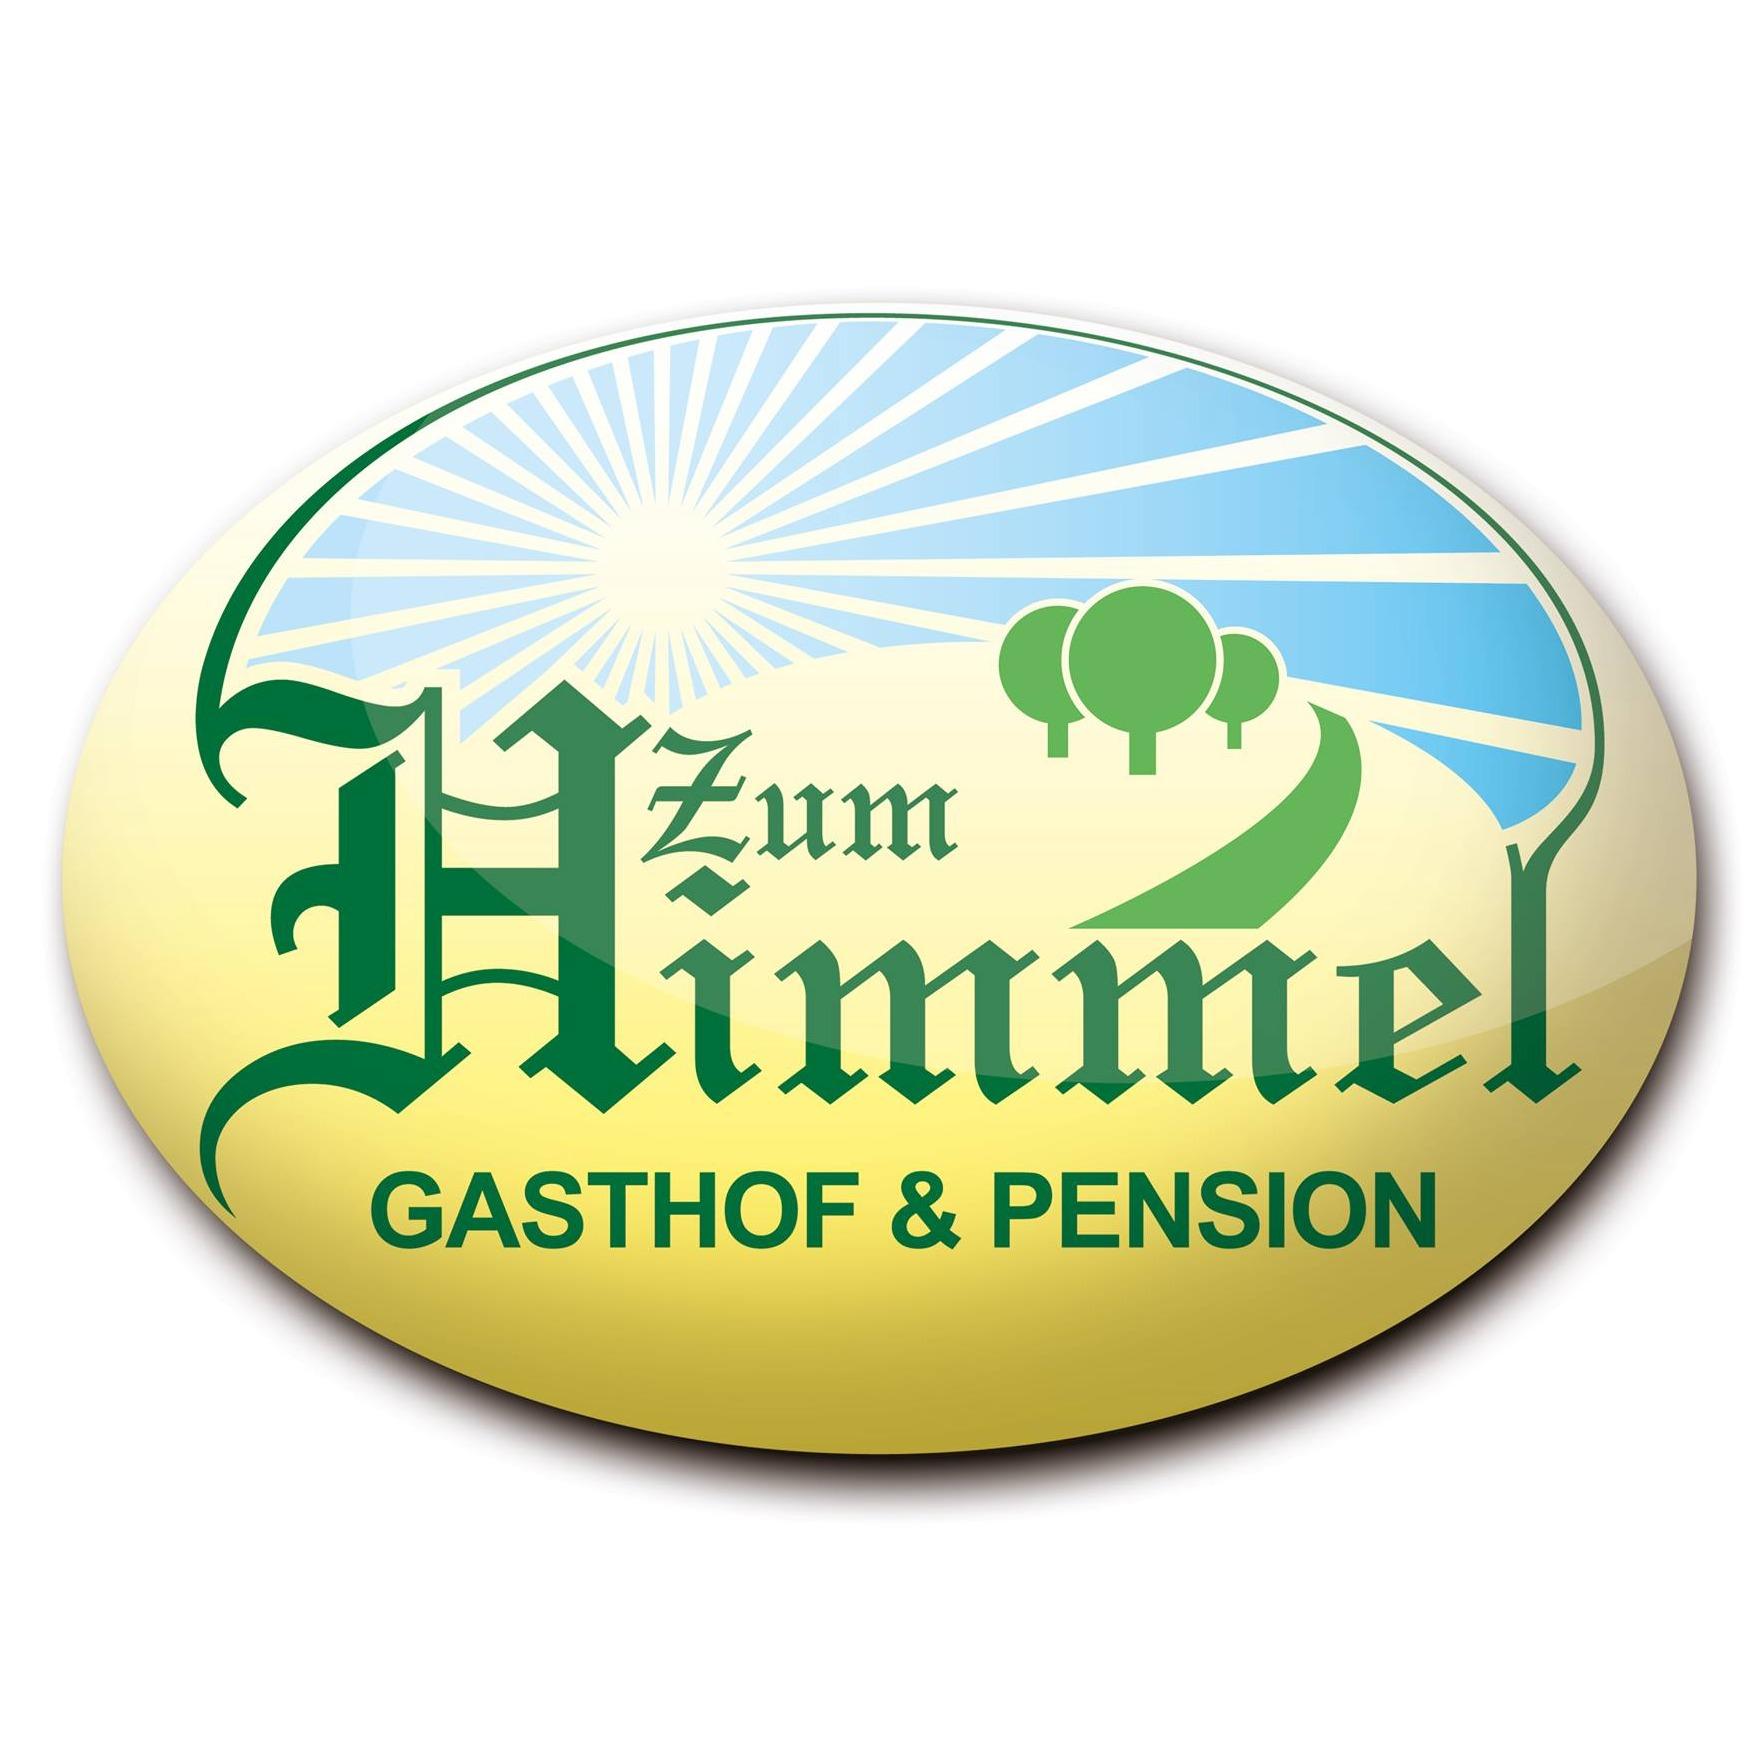 Gasthof & Pension „Zum Himmel“ in Rubenow - Logo